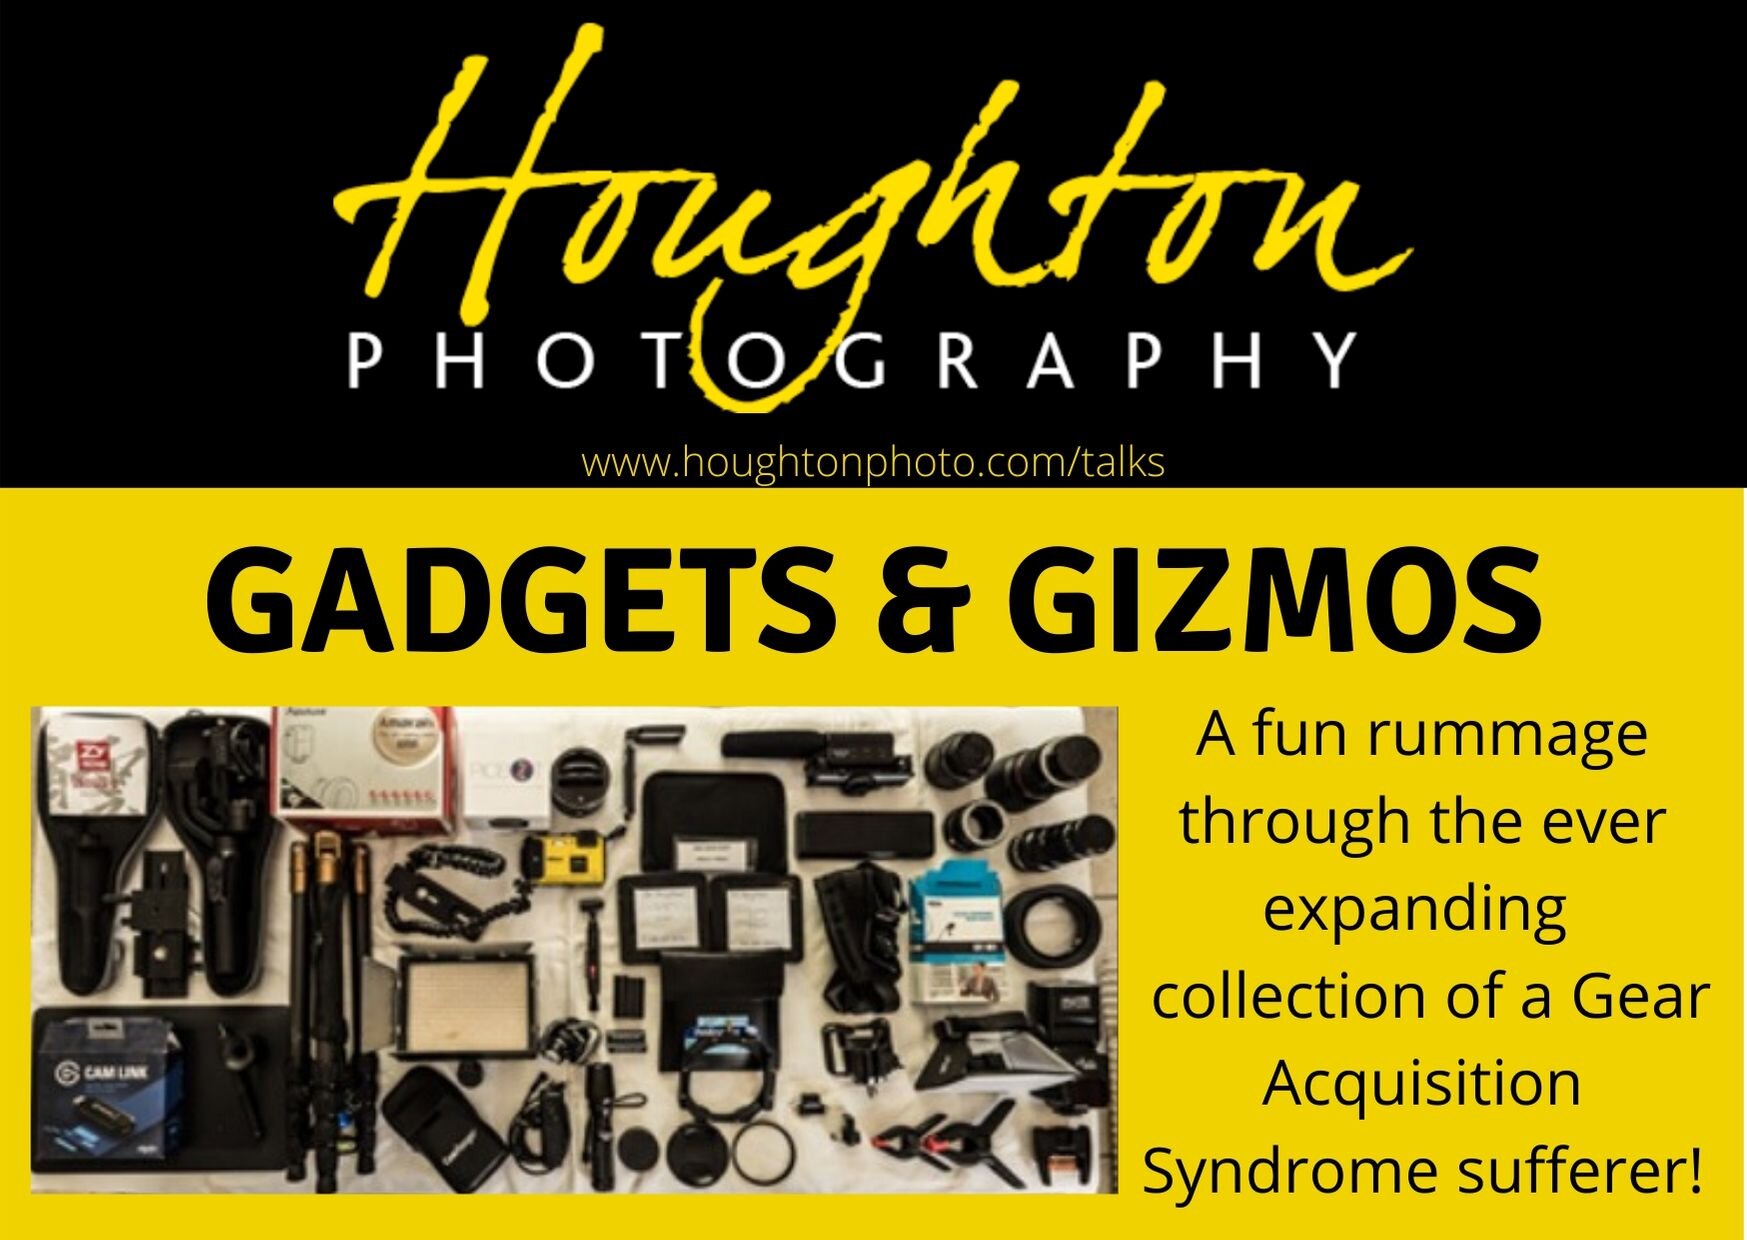 Gadgets & gizmos - talk promo image.jpg